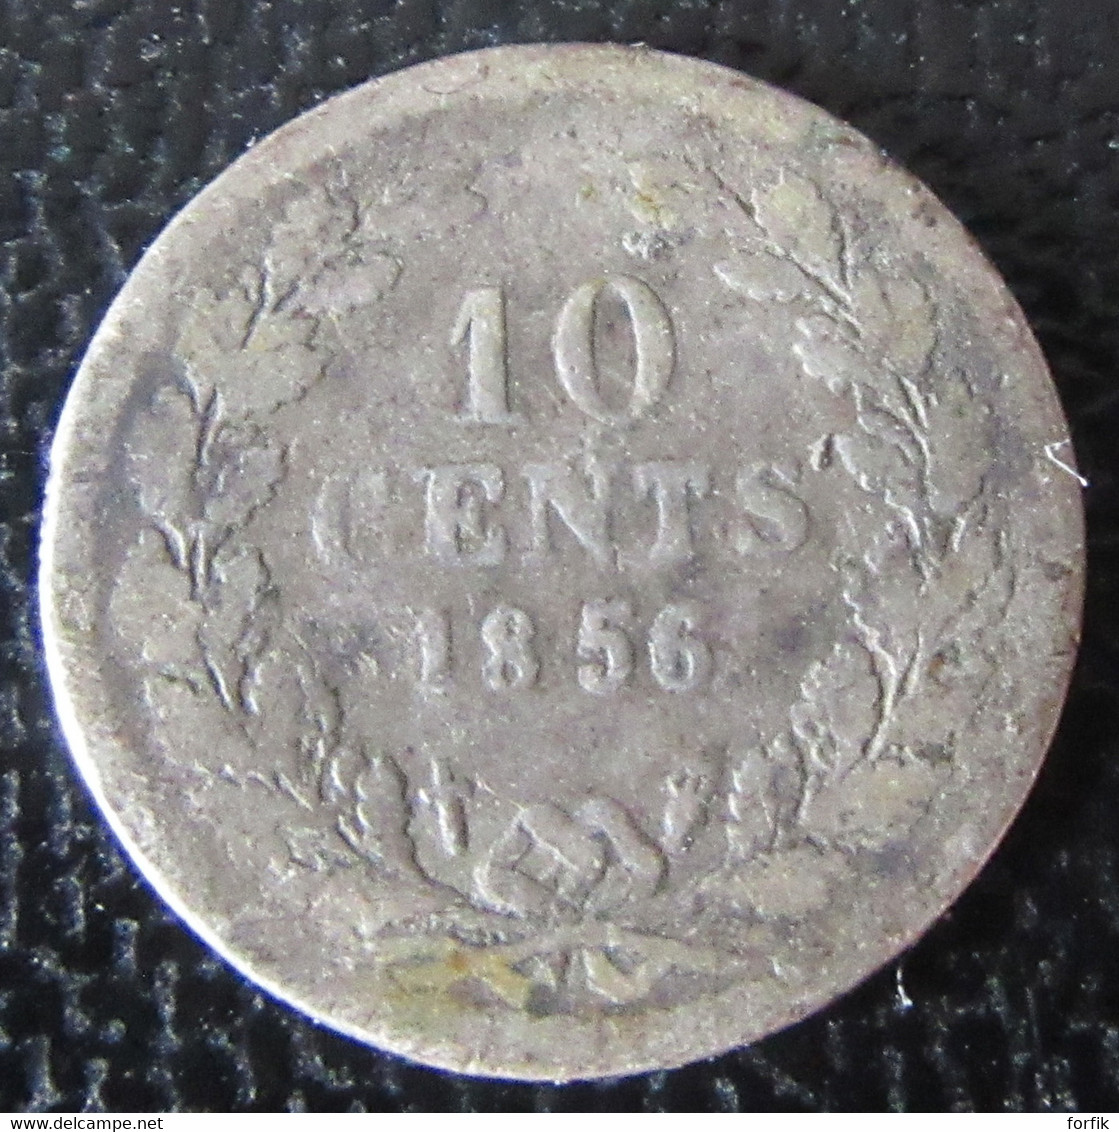 Pays-Bas / Nederland - Monnaie 10 Cents Willem III 1856 En Argent - 1849-1890 : Willem III